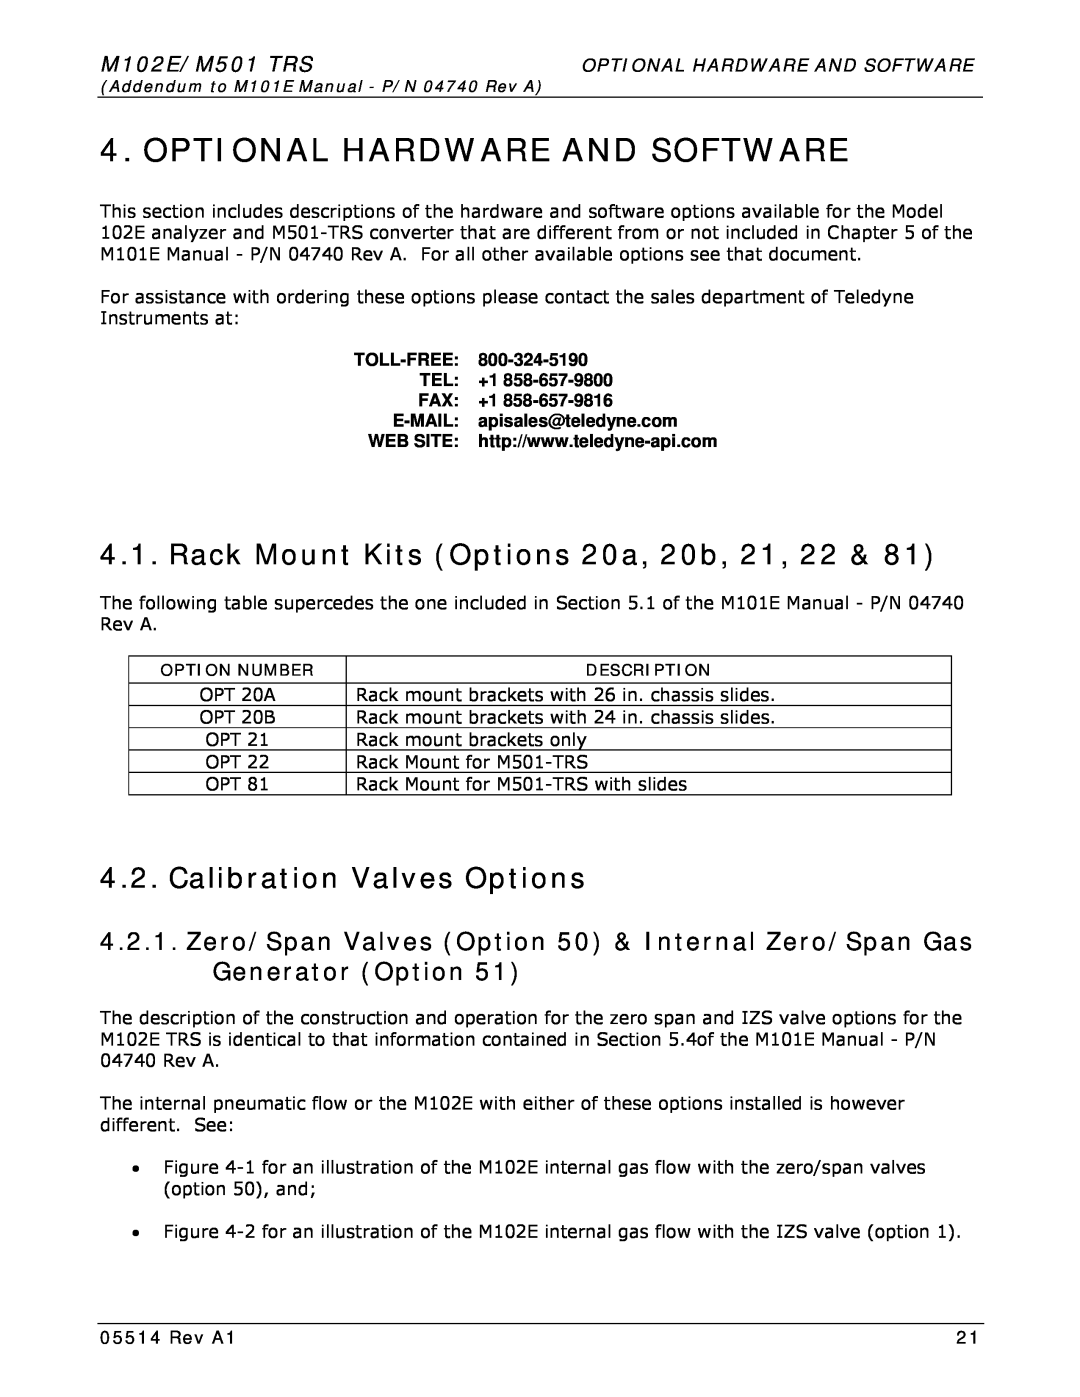 Teledyne 102E Optional Hardware And Software, Rack Mount Kits Options 20a, 20b, 21, 22, Calibration Valves Options, Rev A1 